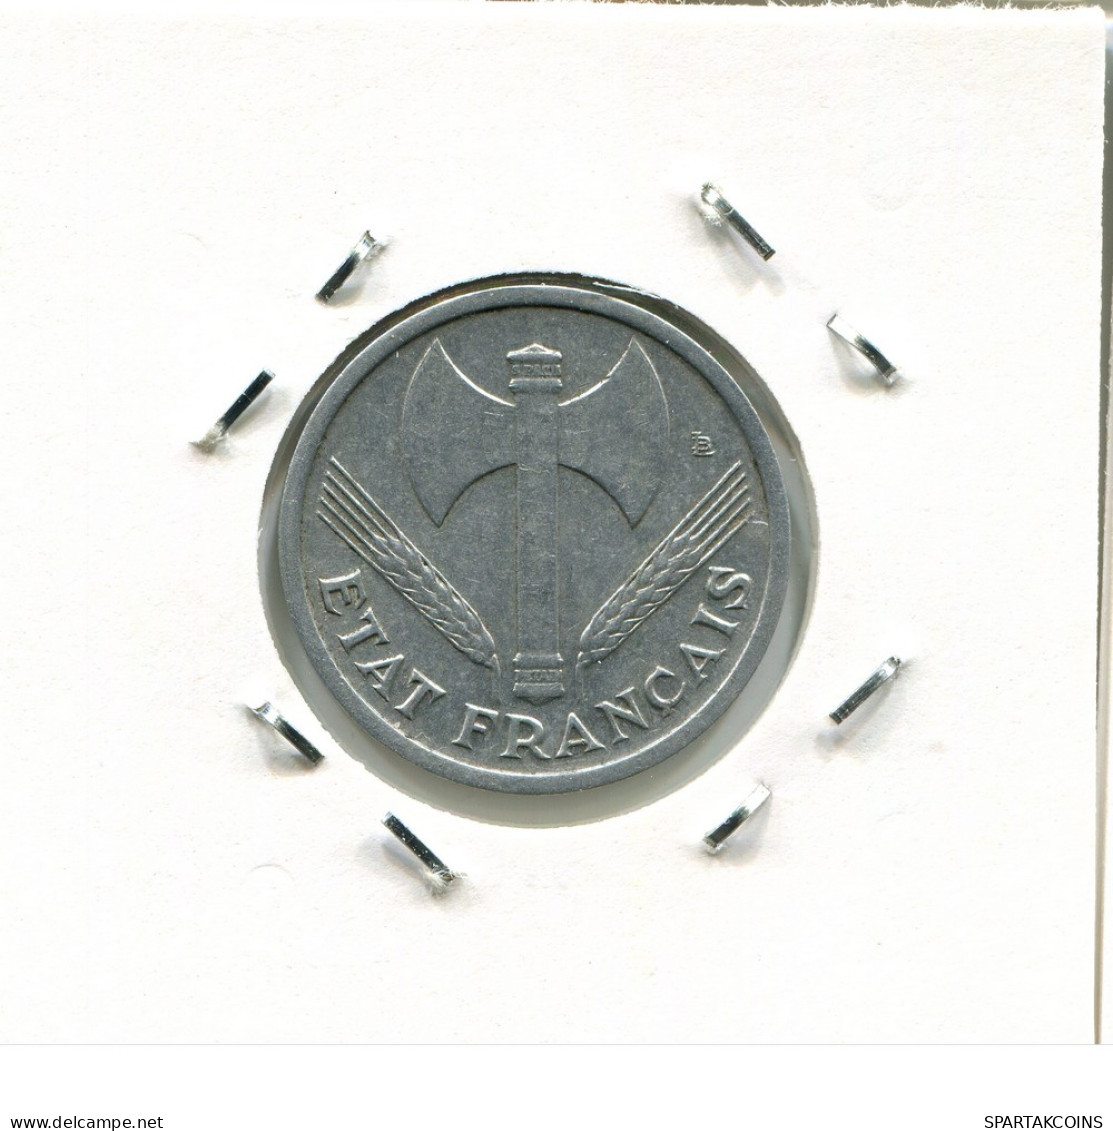 1 FRANC 1943 FRANCIA FRANCE Moneda #AN935.E - 1 Franc